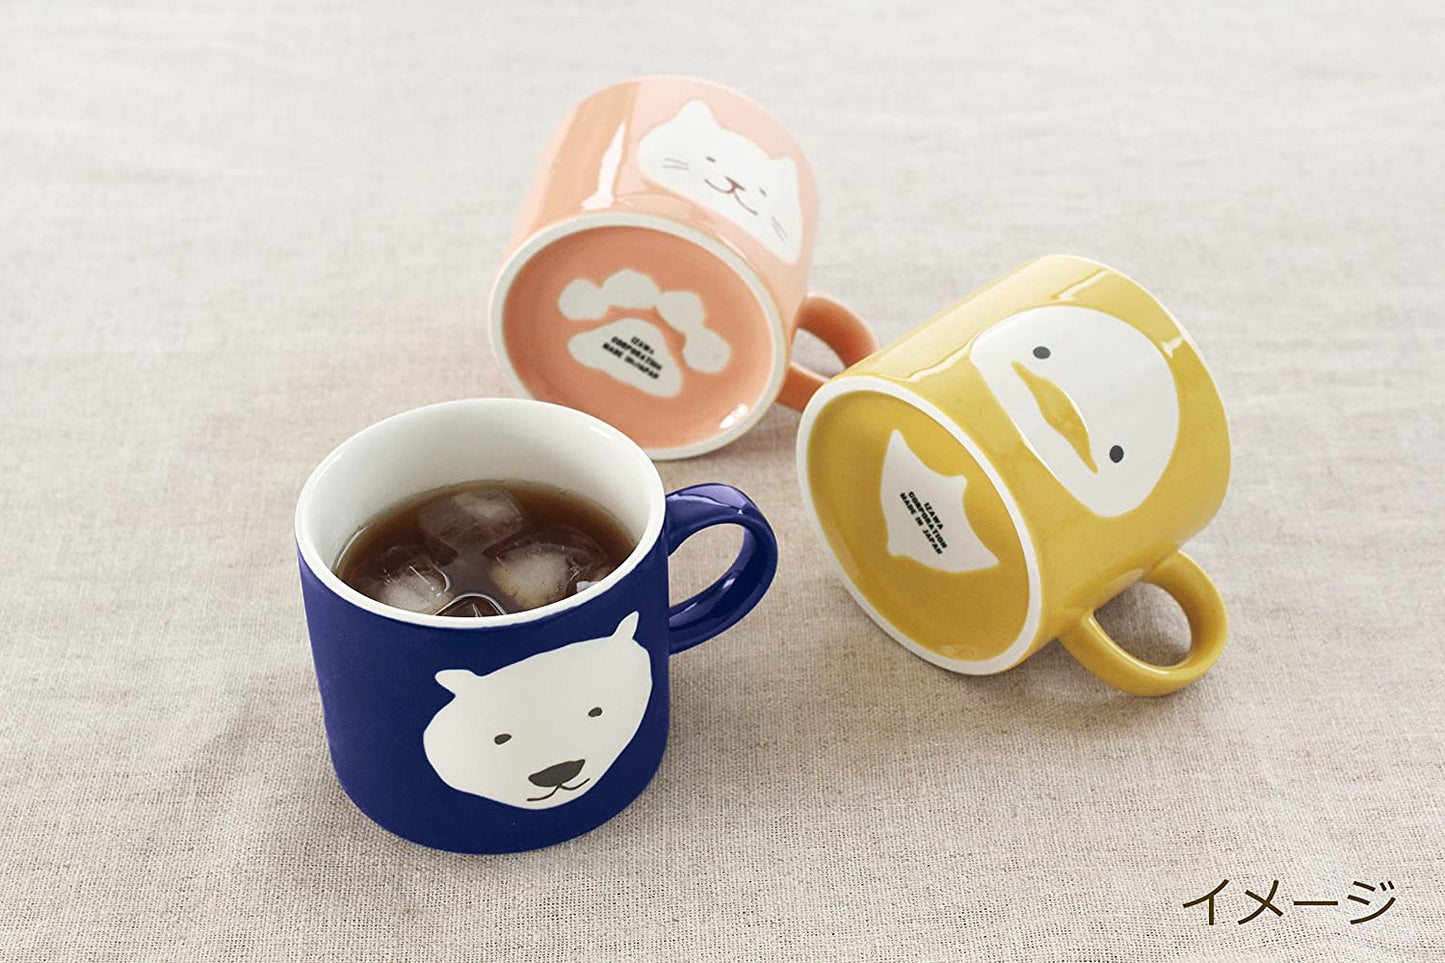 Minoyaki Easy Zoo Mug-Cat日本美浓烧轻松动物园马克杯咖啡杯-猫猫